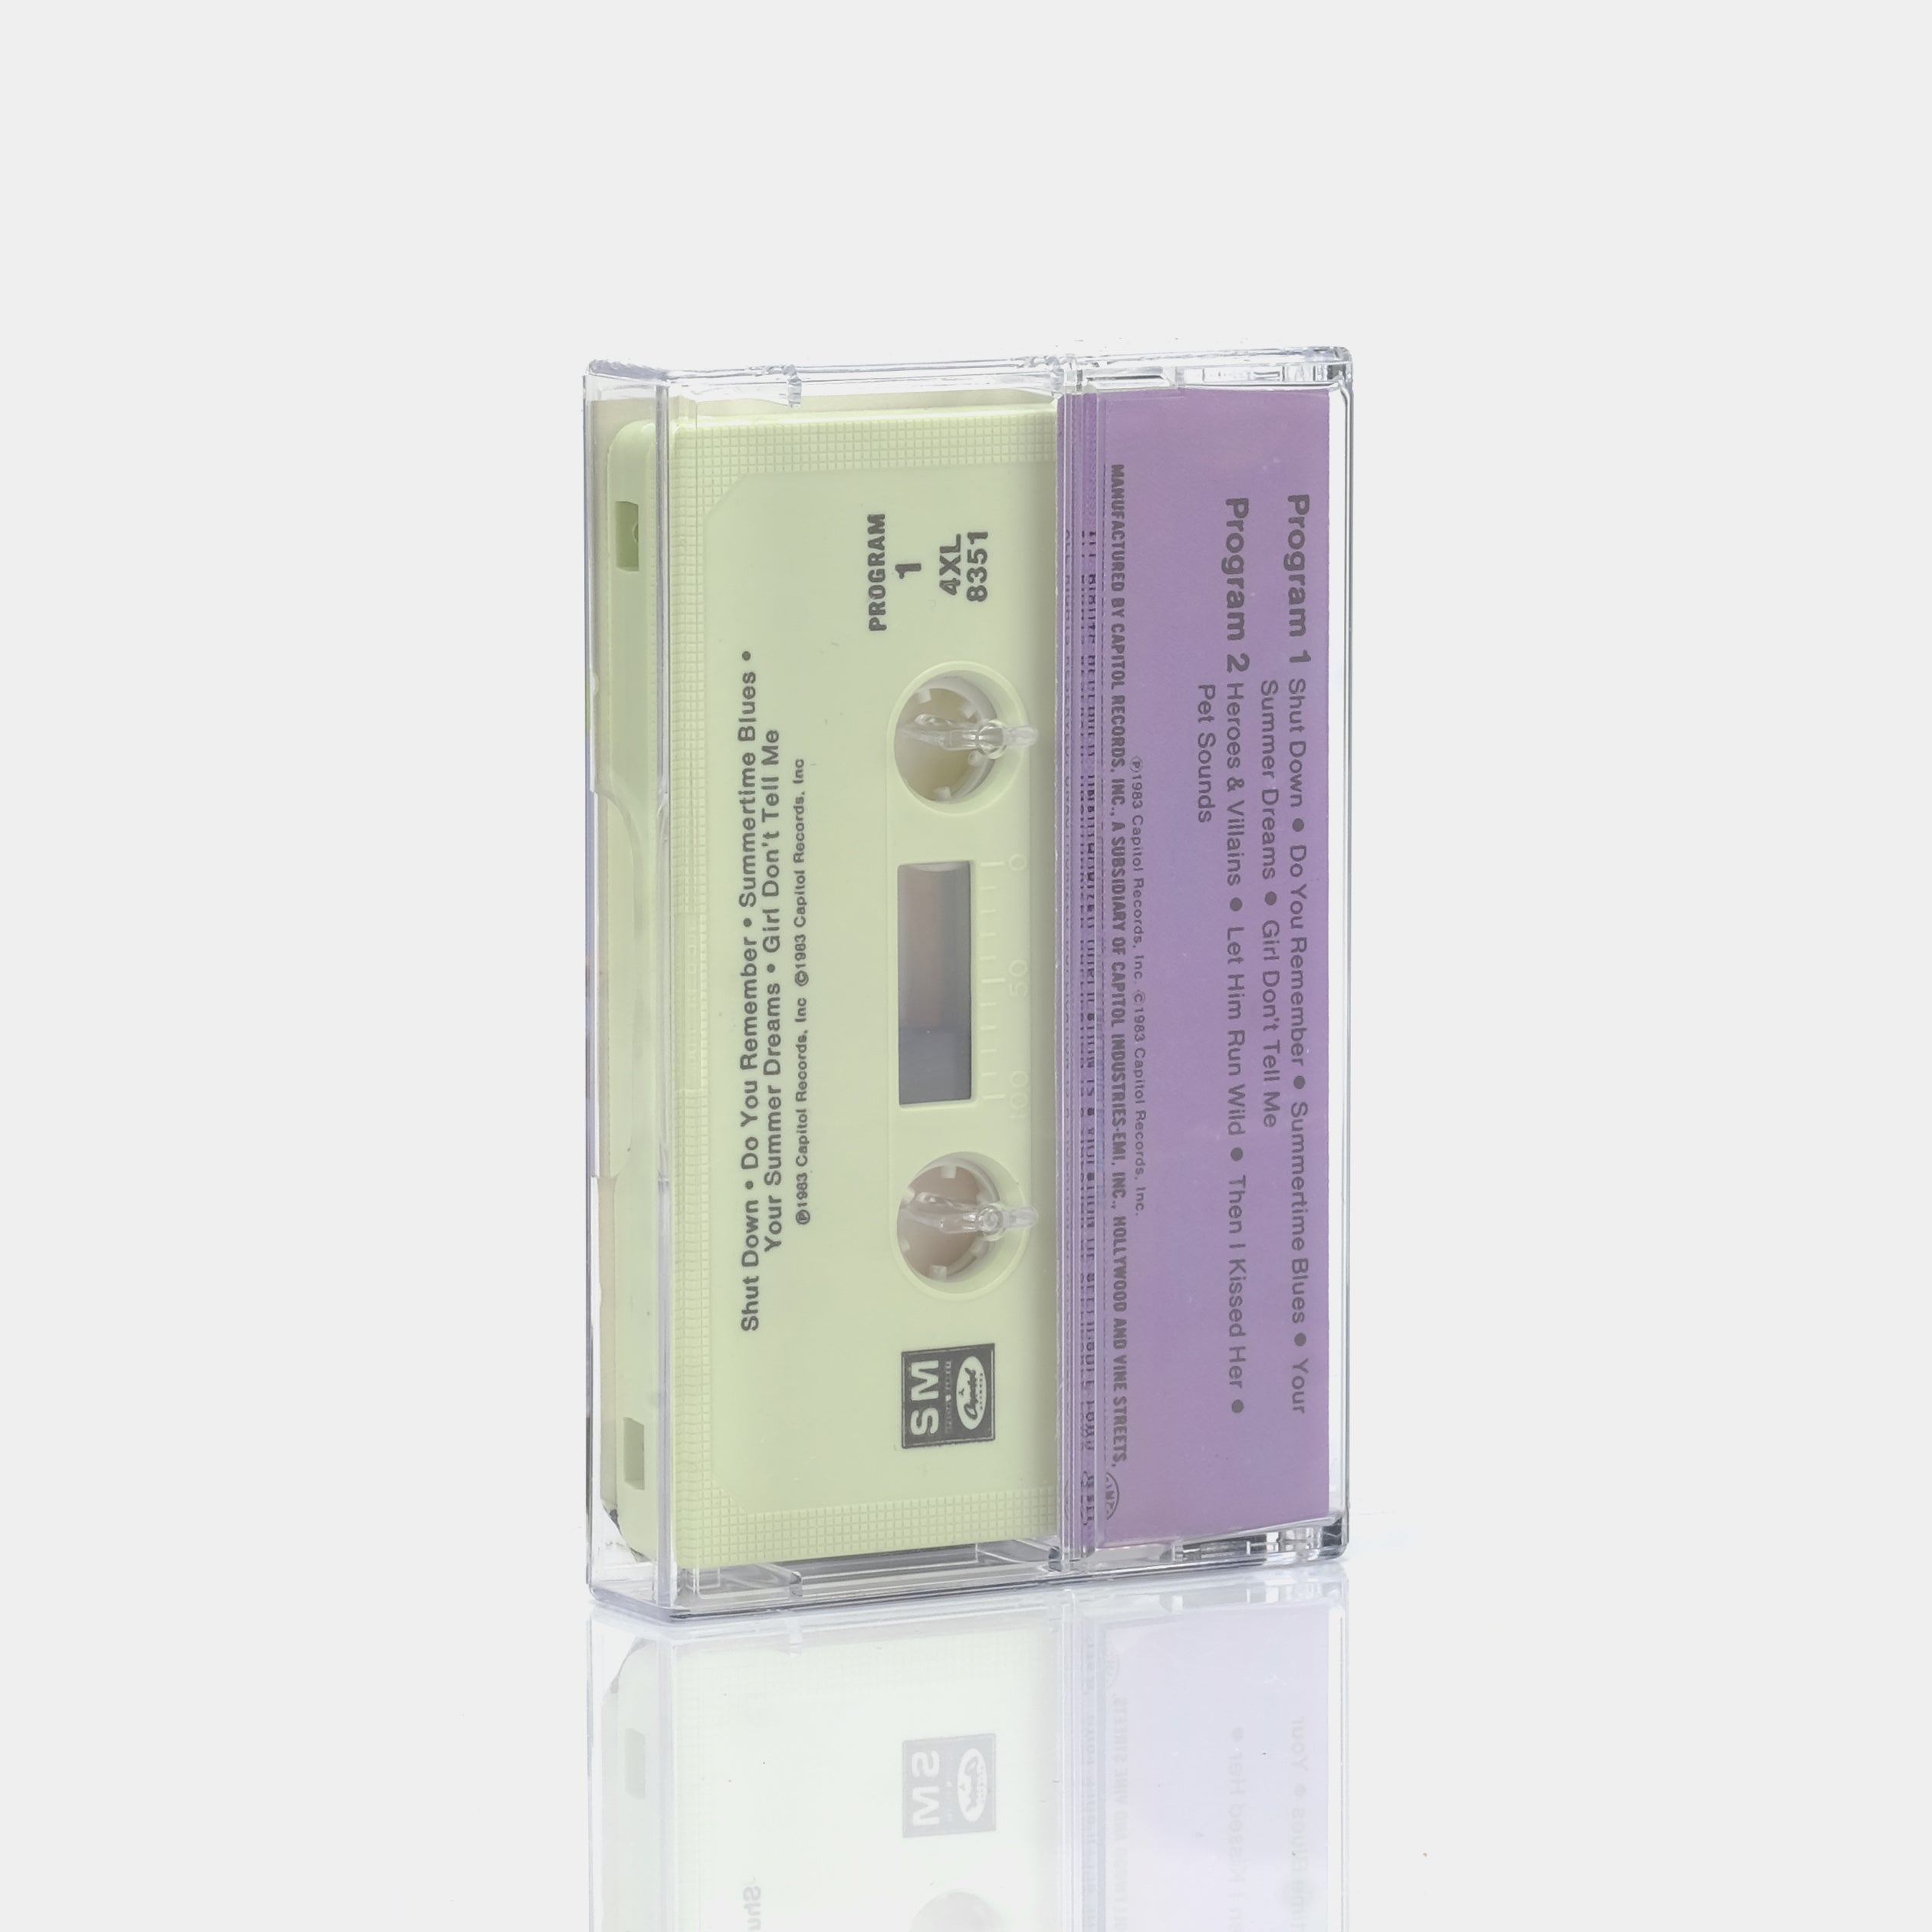 The Beach Boys - Summer Dreams Cassette Tape